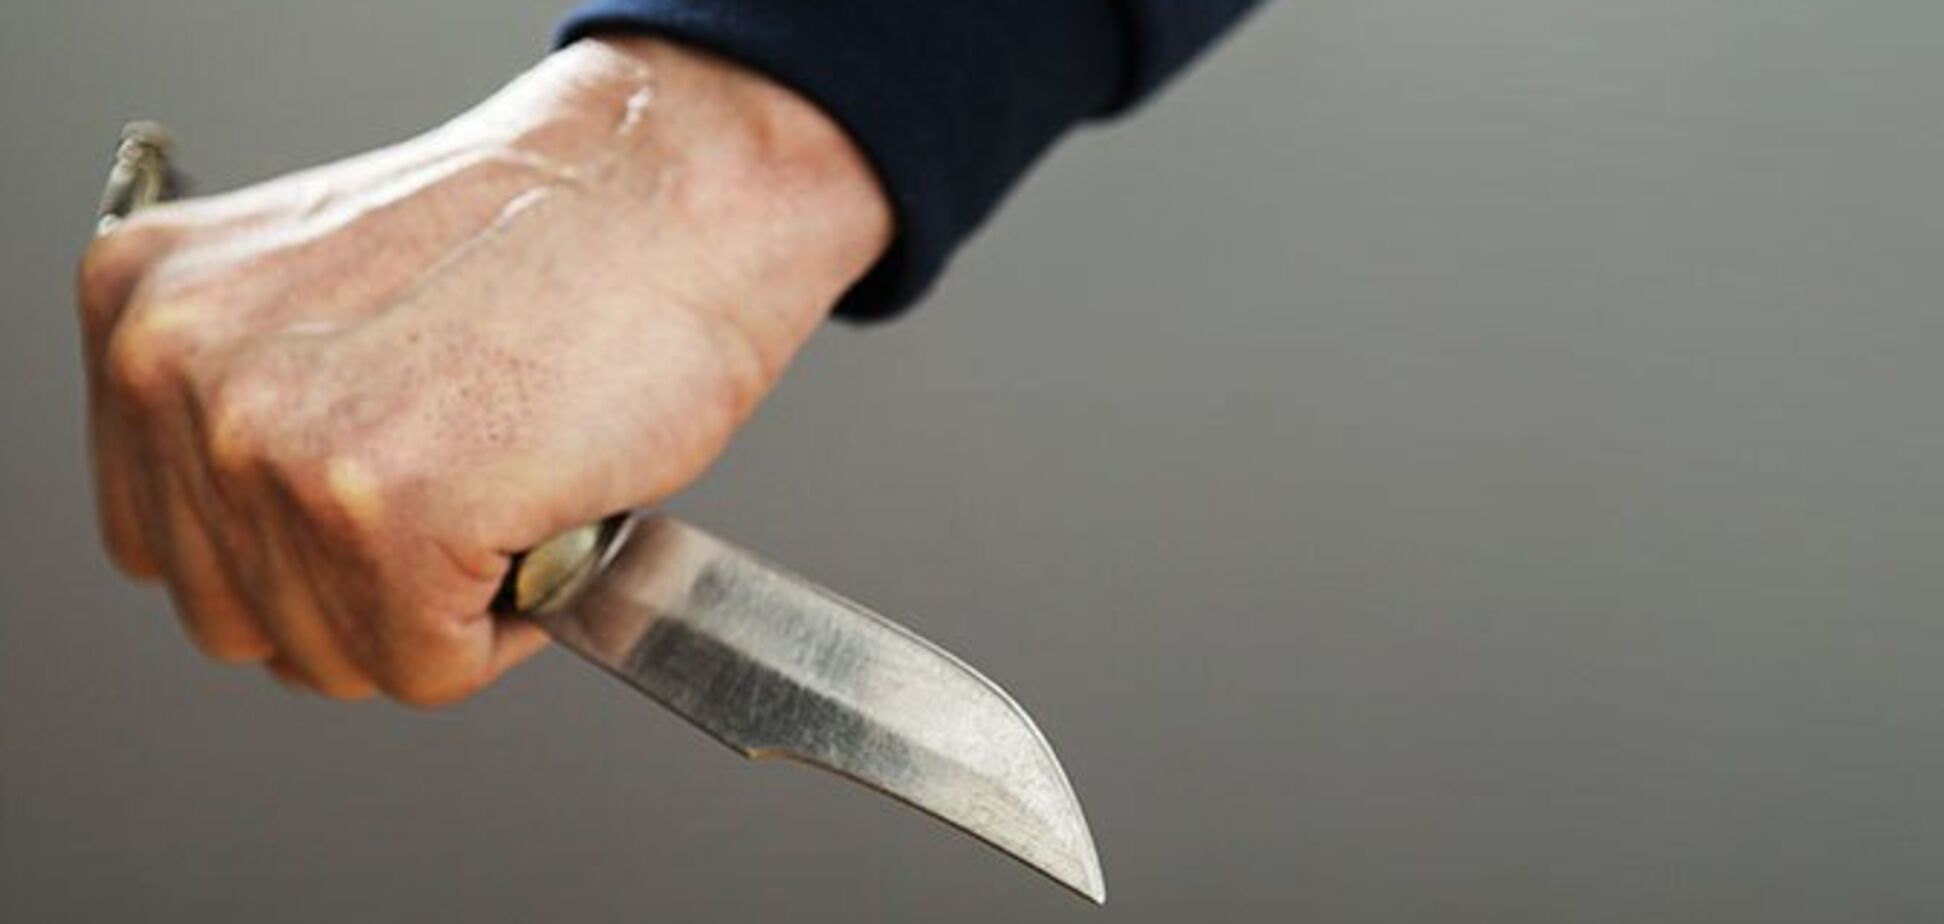 Угрожал ножом: под Днепром разбойник напал на 20-летнюю девушку